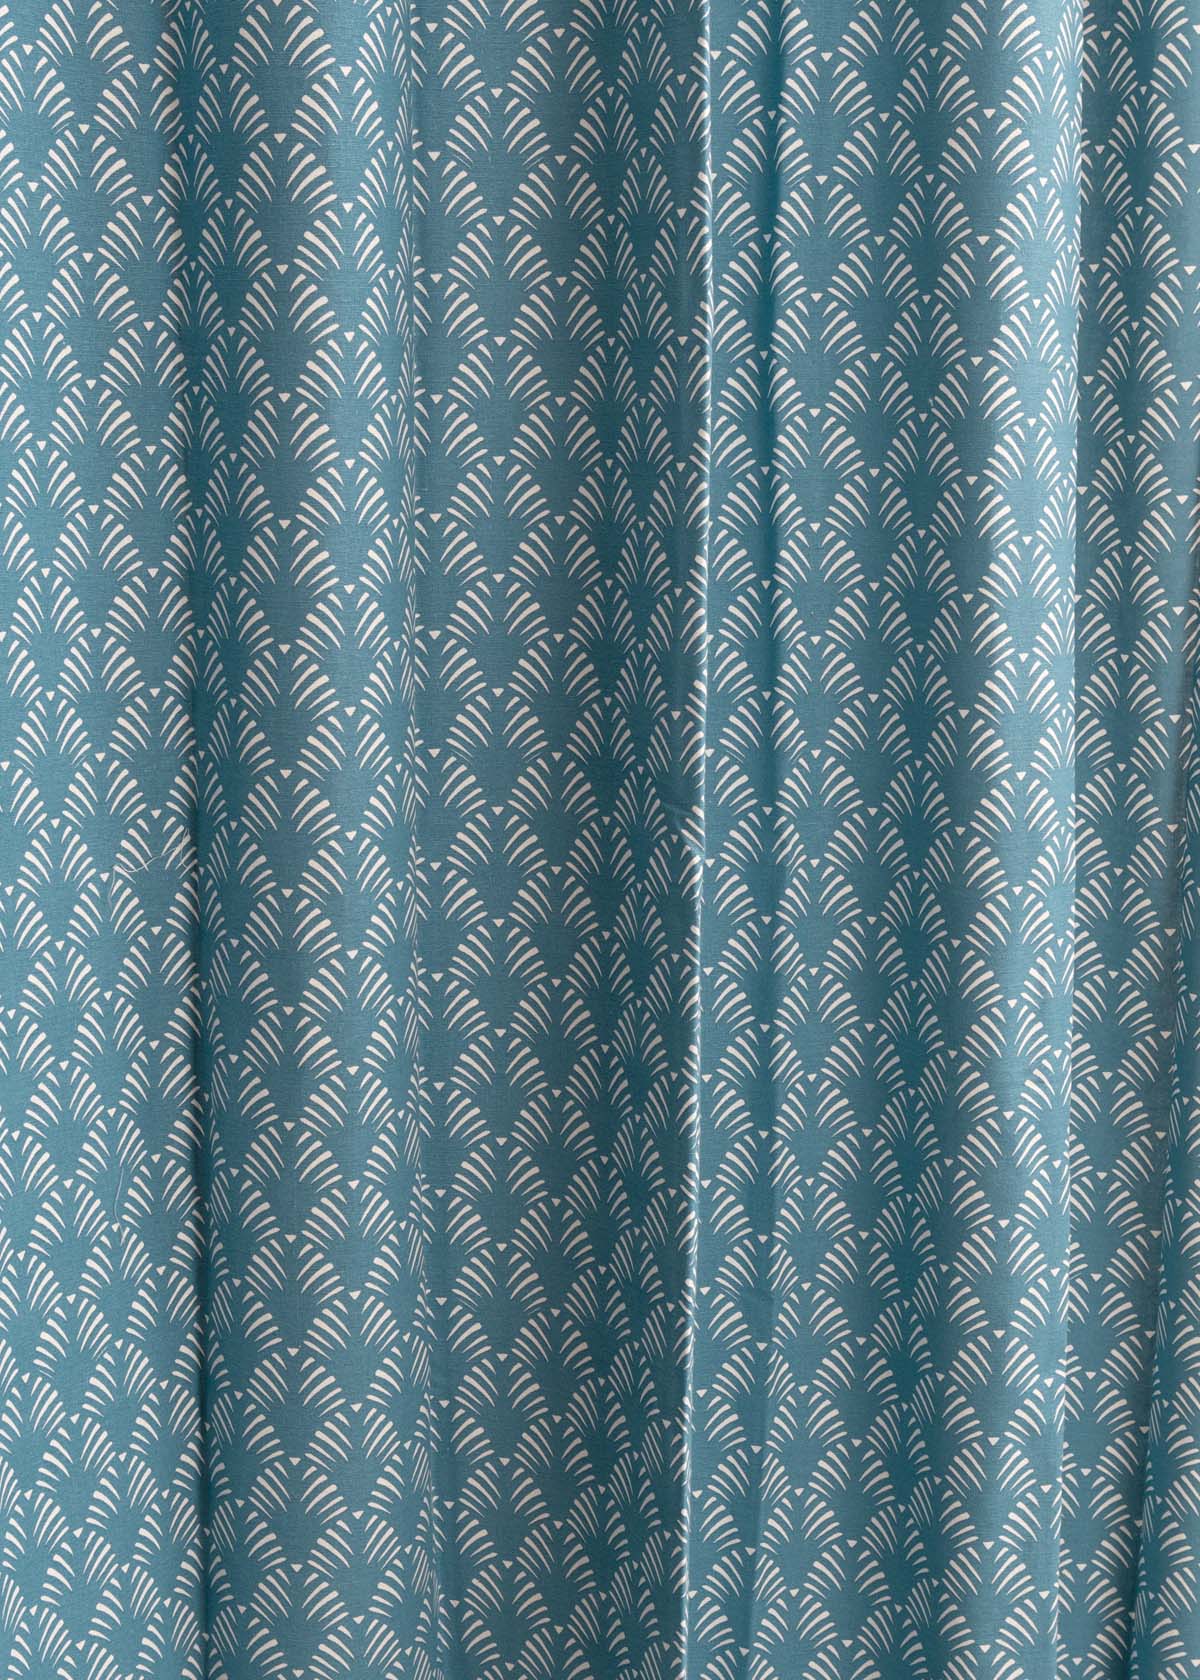 Pergola Printed Cotton Curtain - Indigo - Single